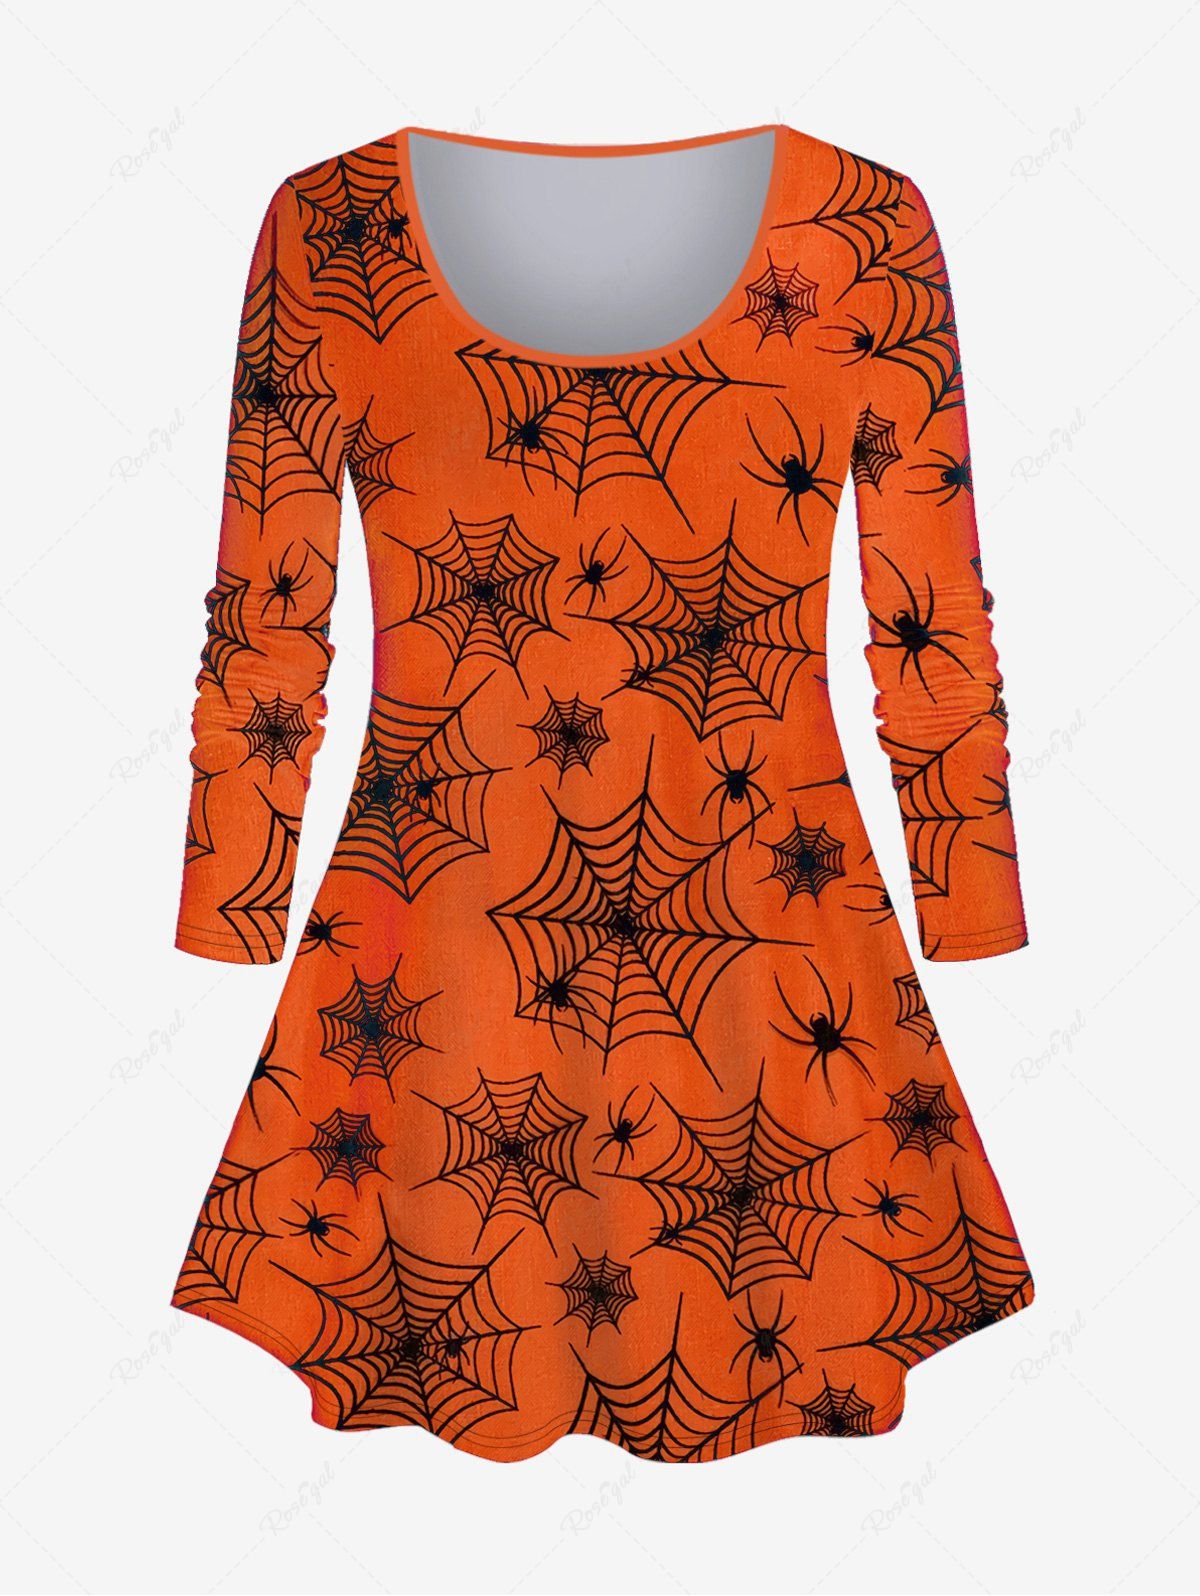 Chic Plus Size Halloween Spider Web Colorblock Print T-shirt  